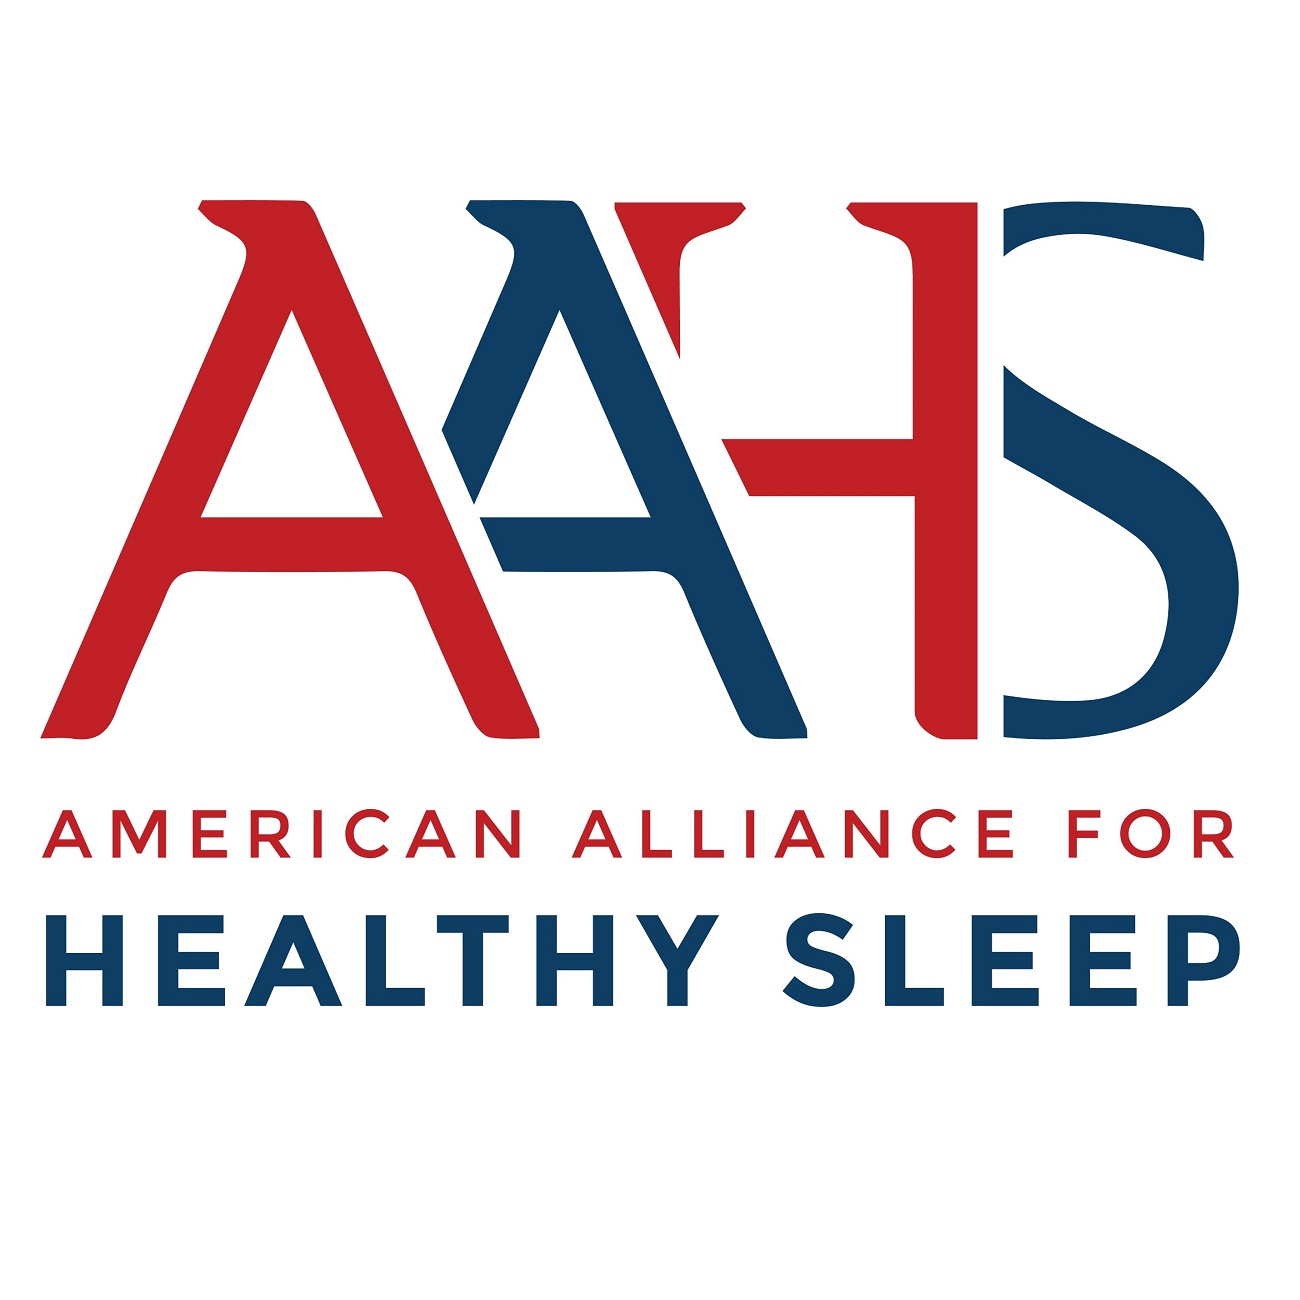 American Alliance for Healthy Sleep Photo